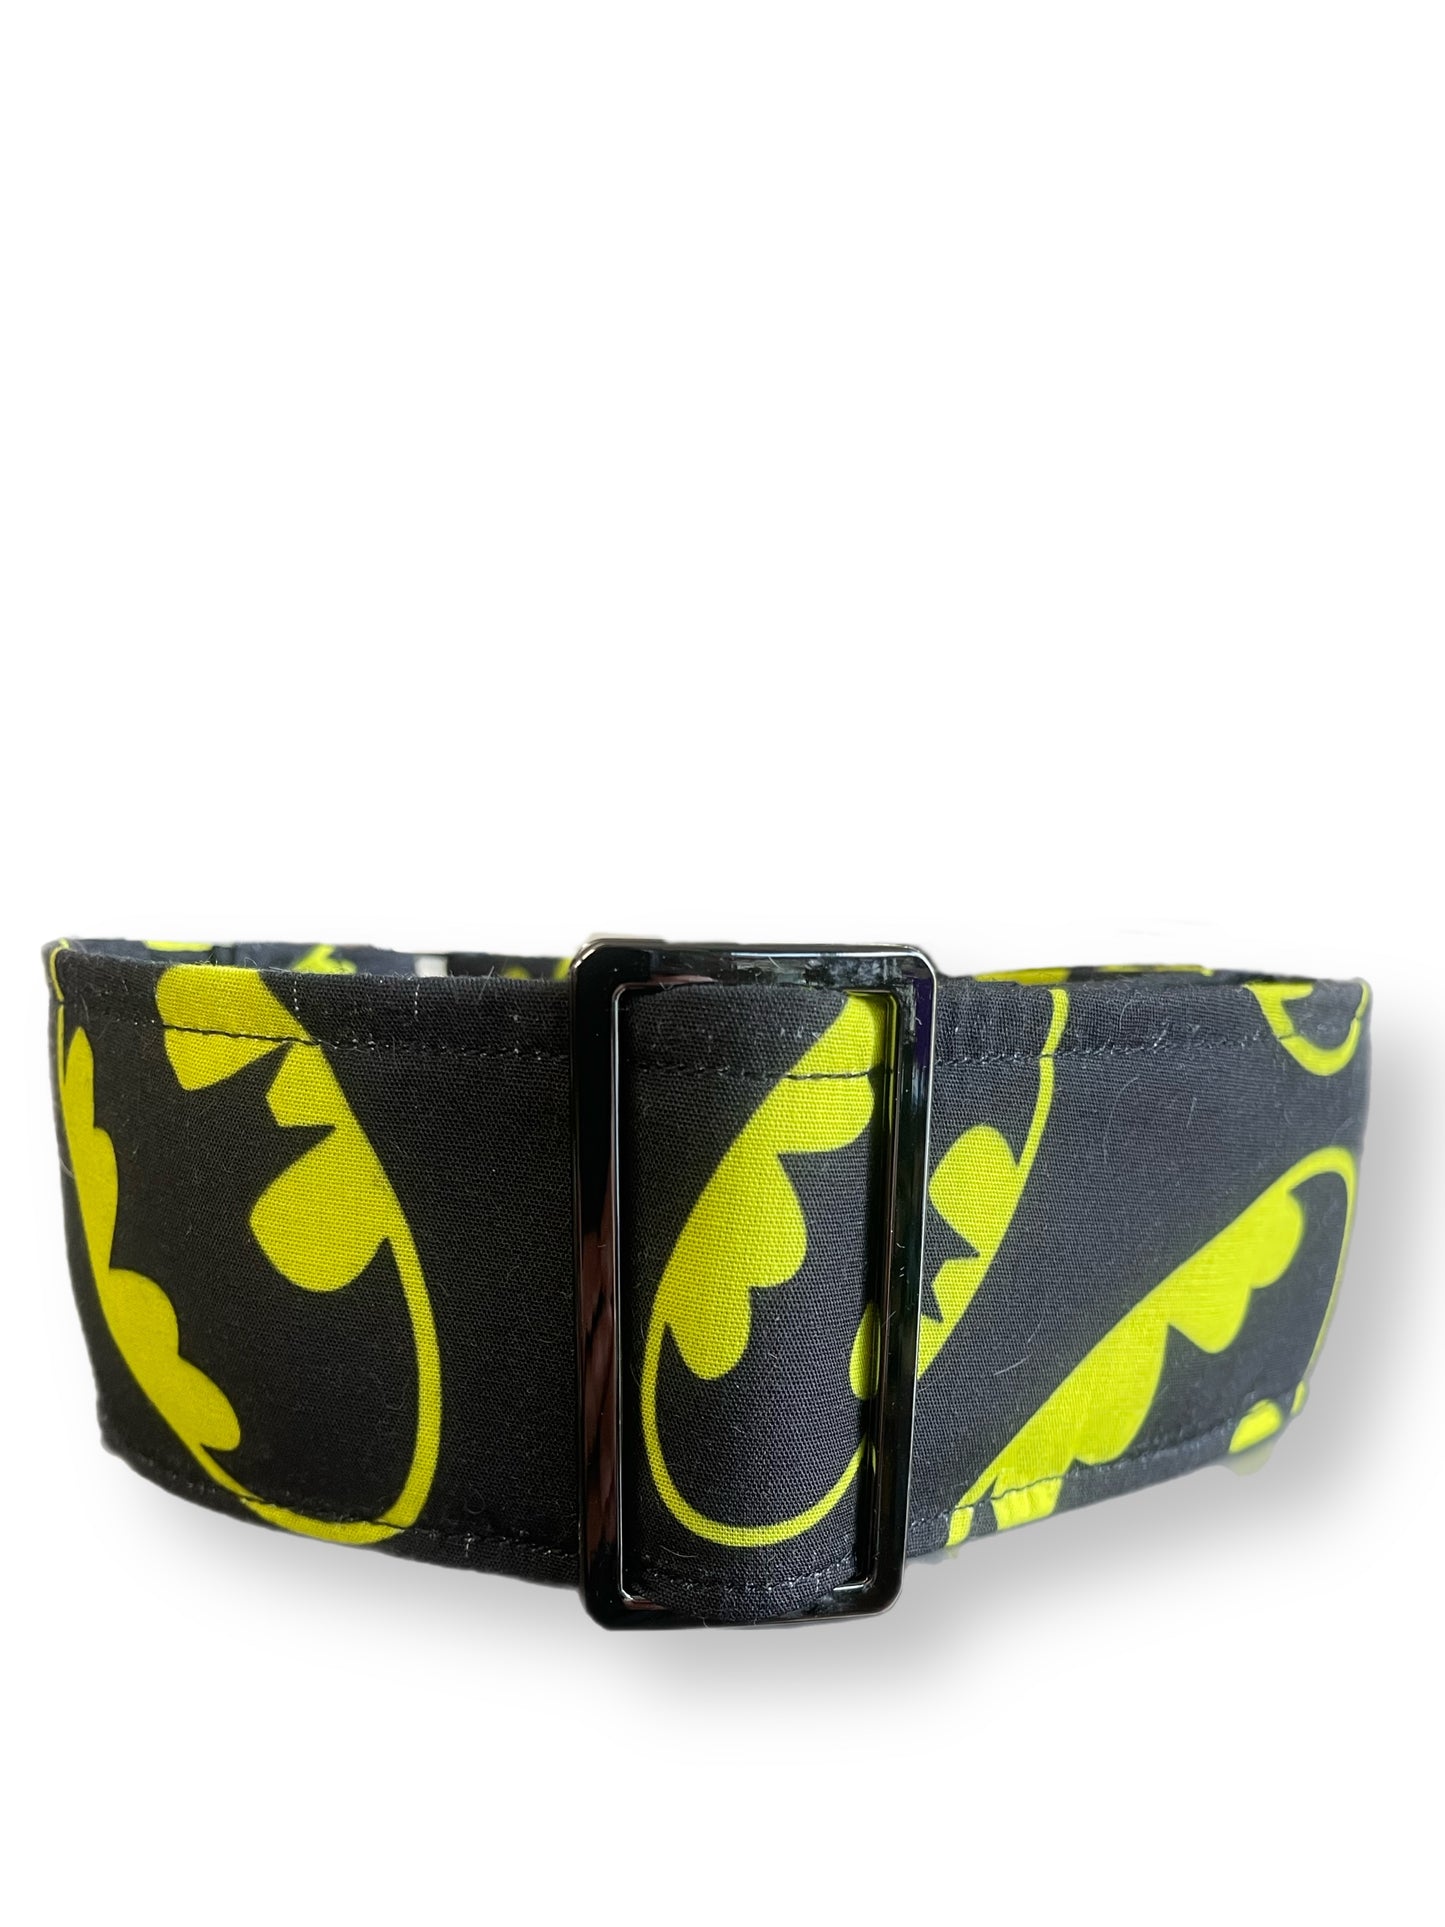 Batman Cotton blend covered greyhound Martingale collar 50mm width super soft